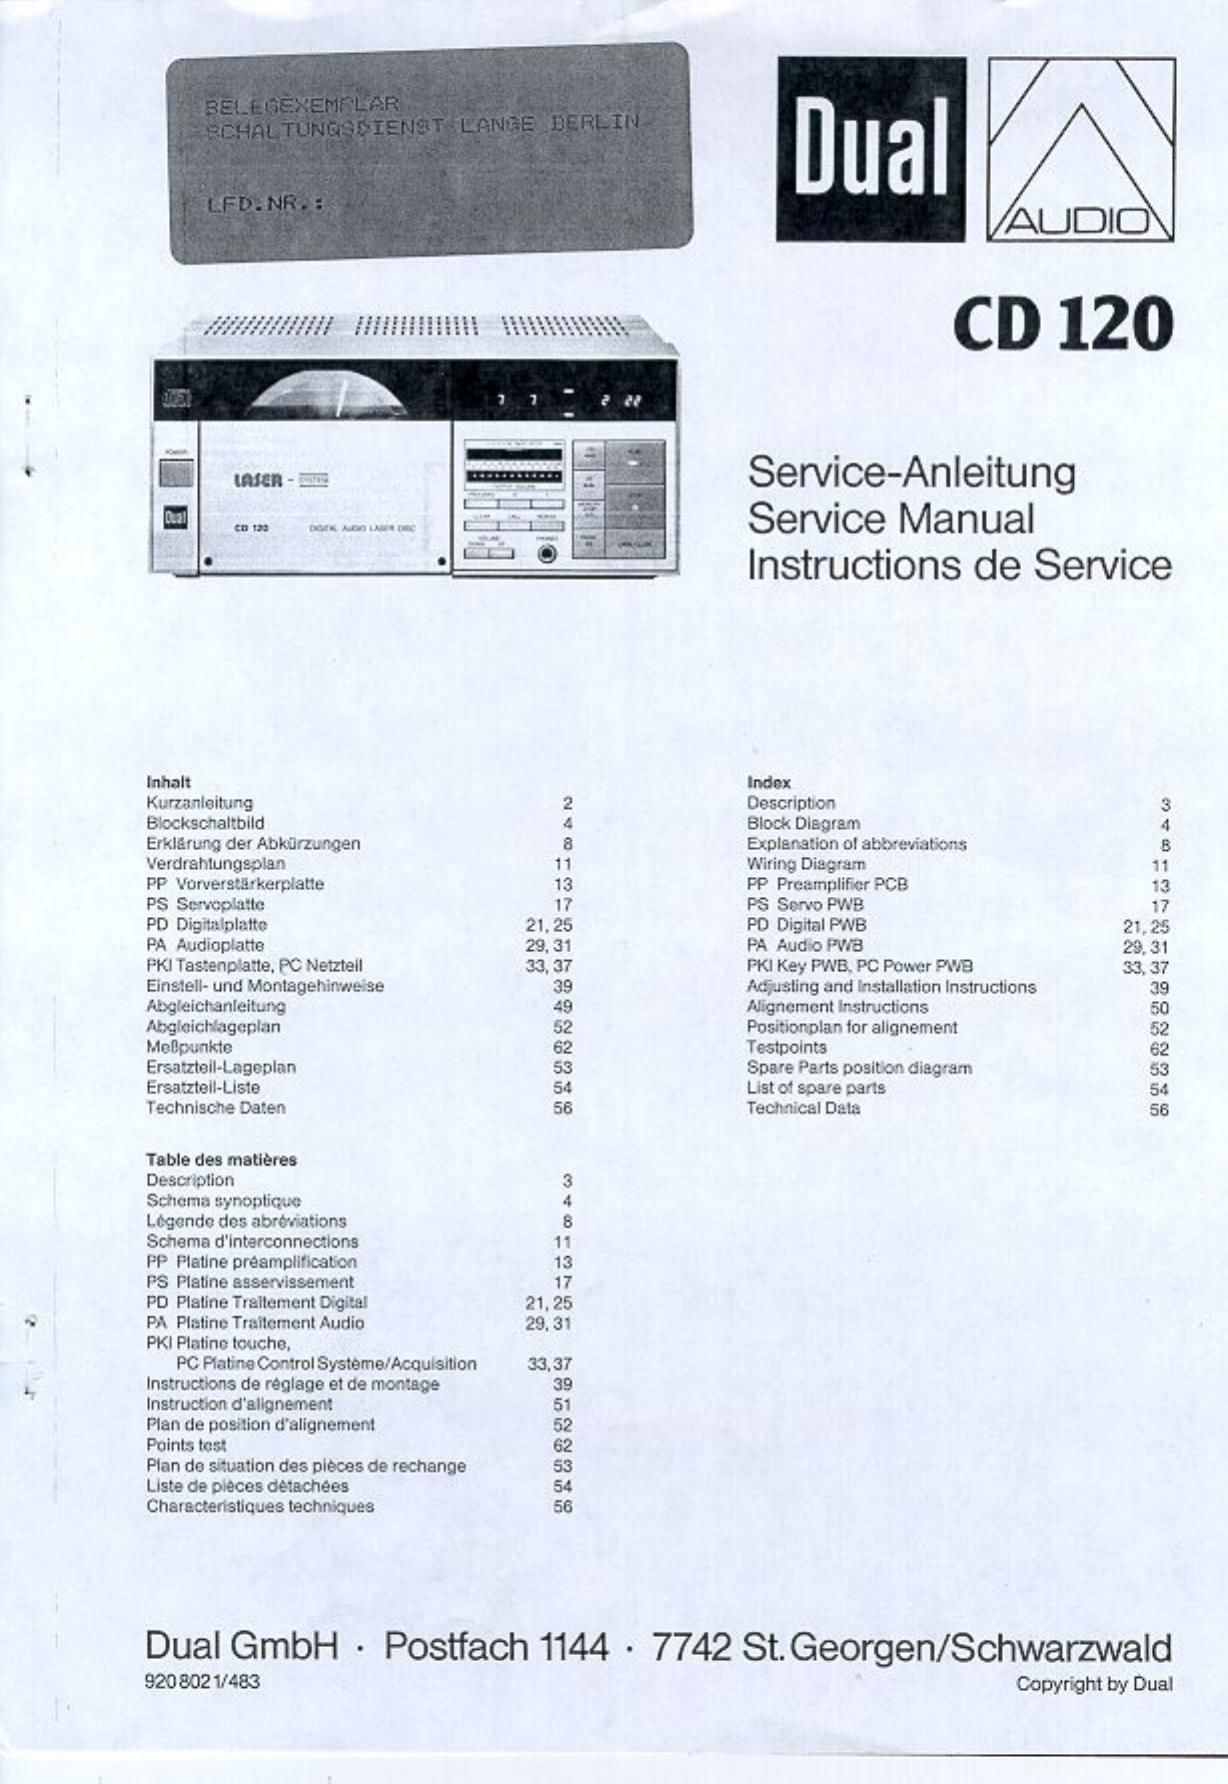 Dual CD 120 Service Manual